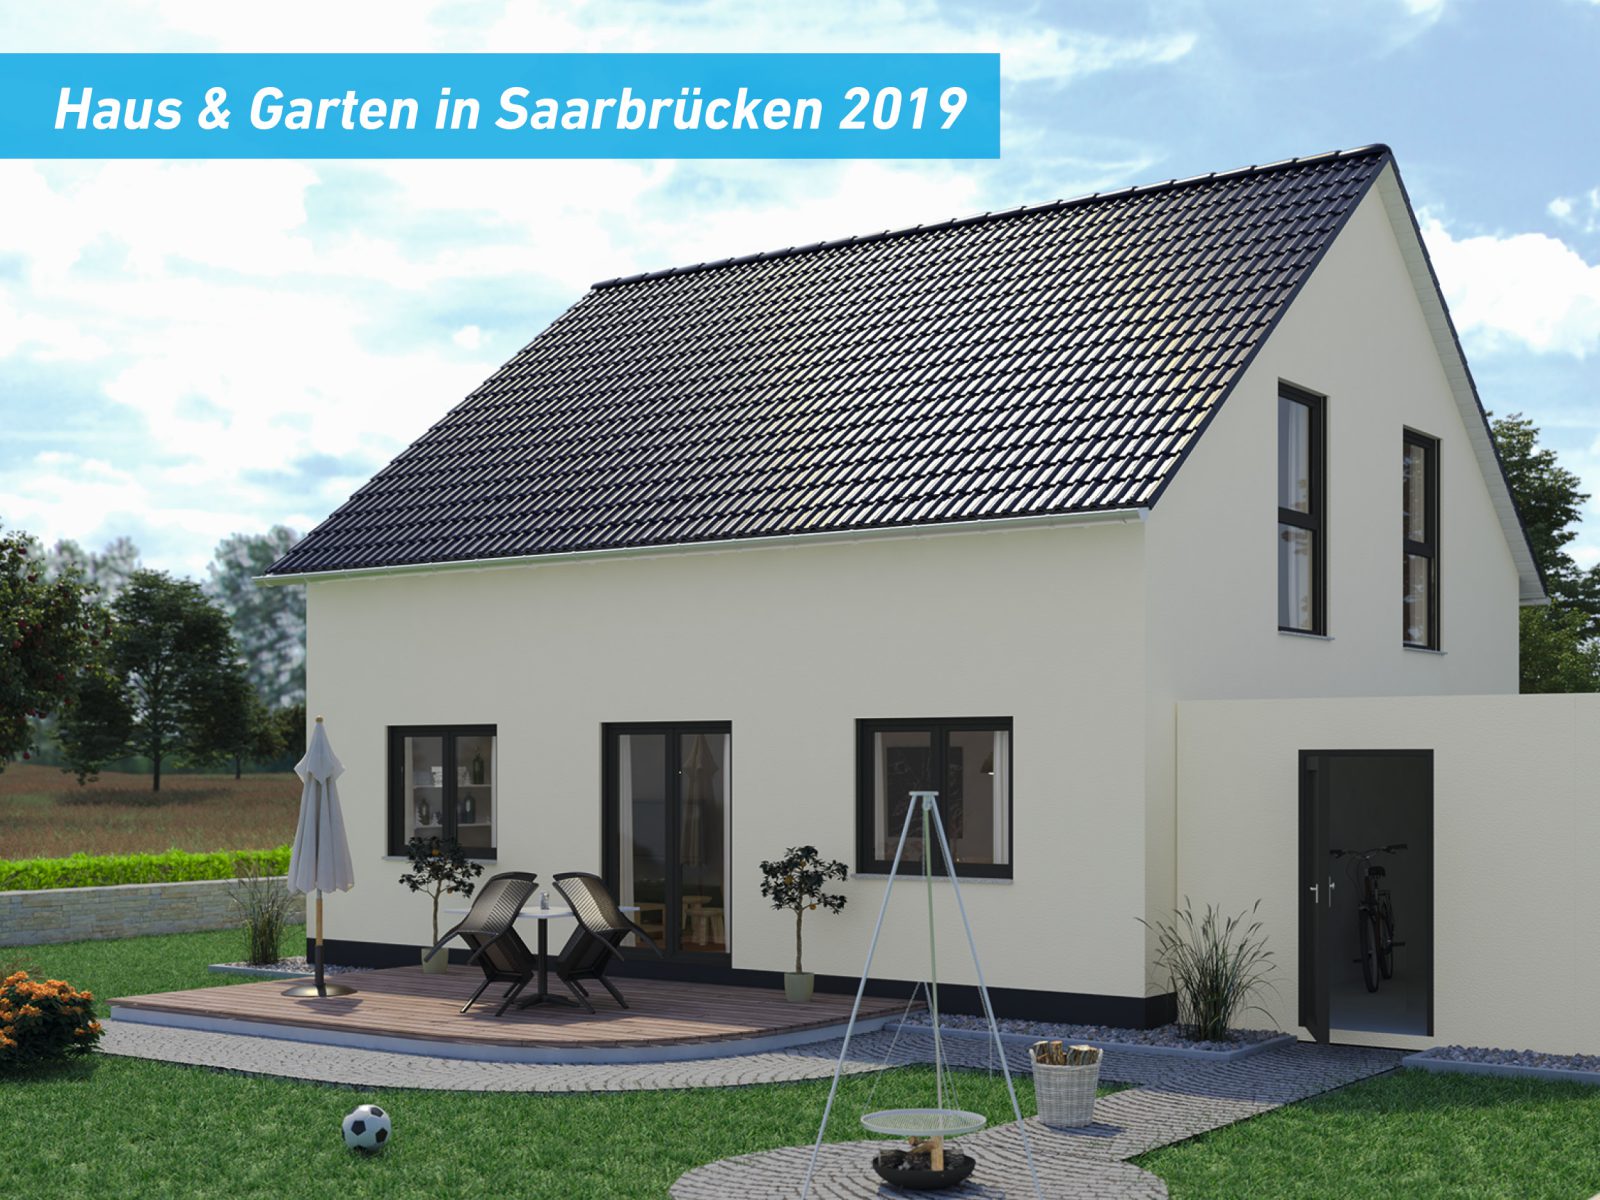 Haus & Garten in Saarbrücken 2019